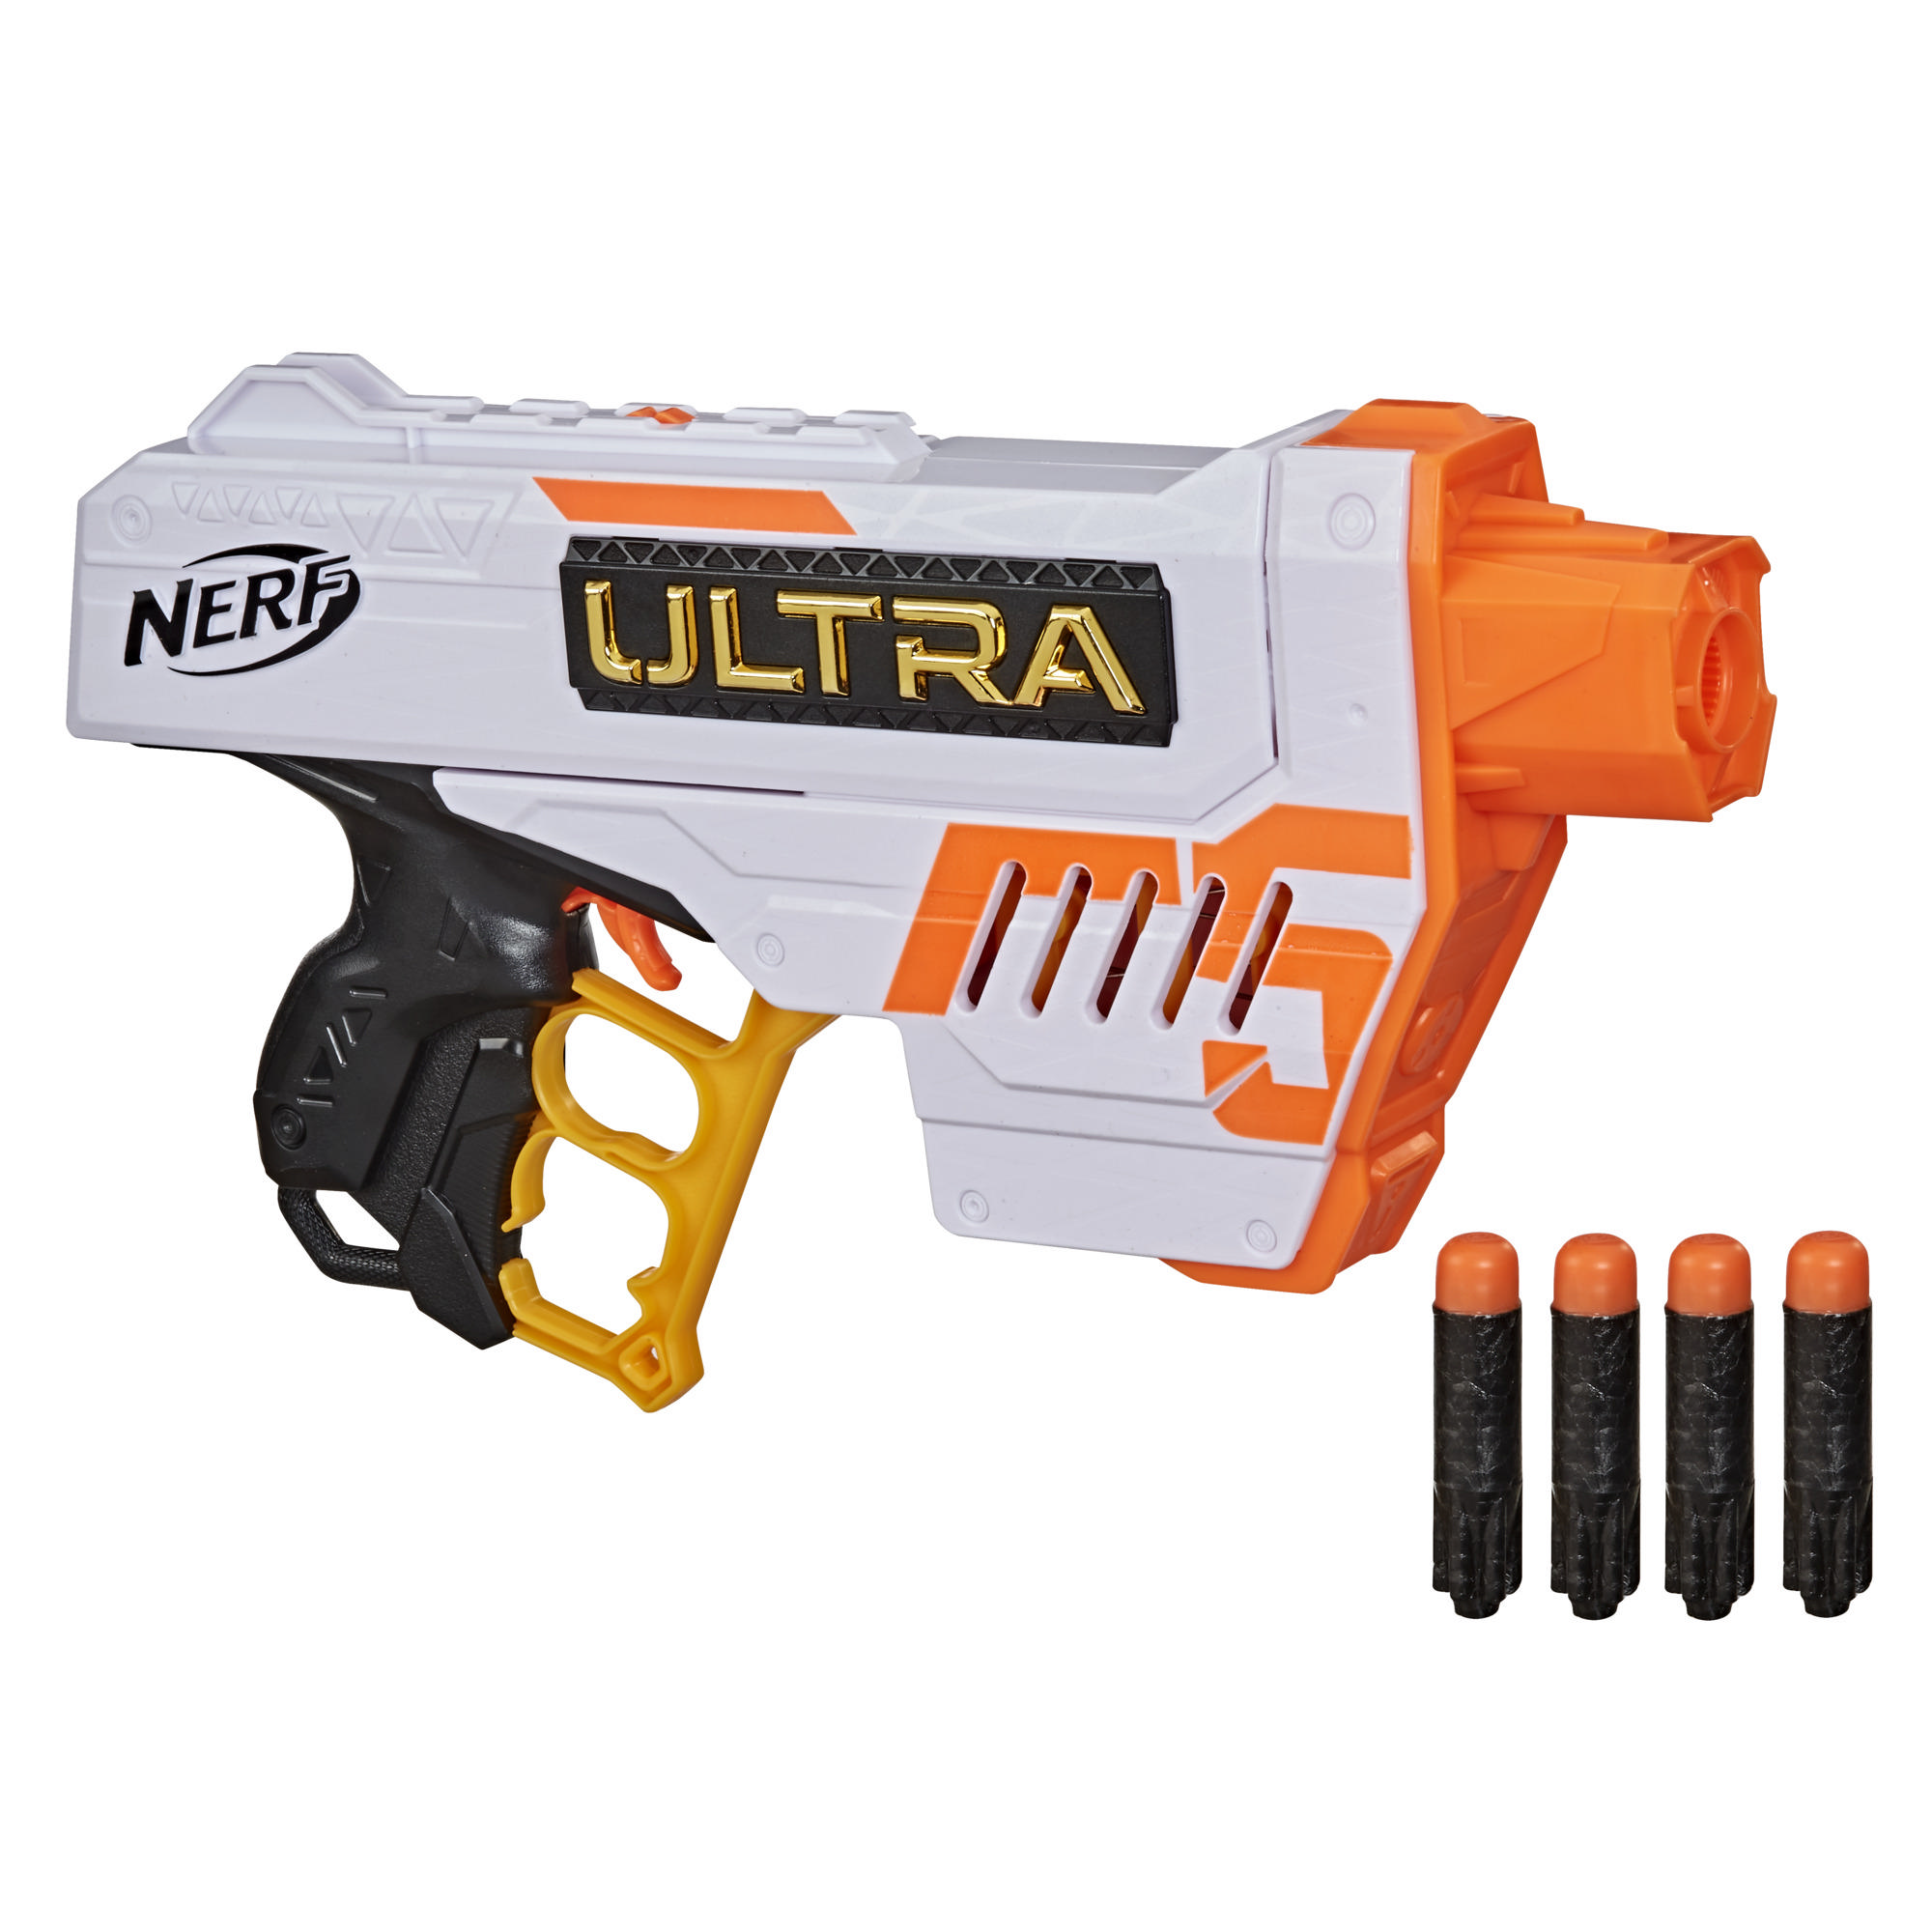 Lanzador Nerf Ultra Five - Clip de 4 dardos - 4 dardos Nerf Ultra - Portadardos - Compatible solo con dardos Nerf Ultra